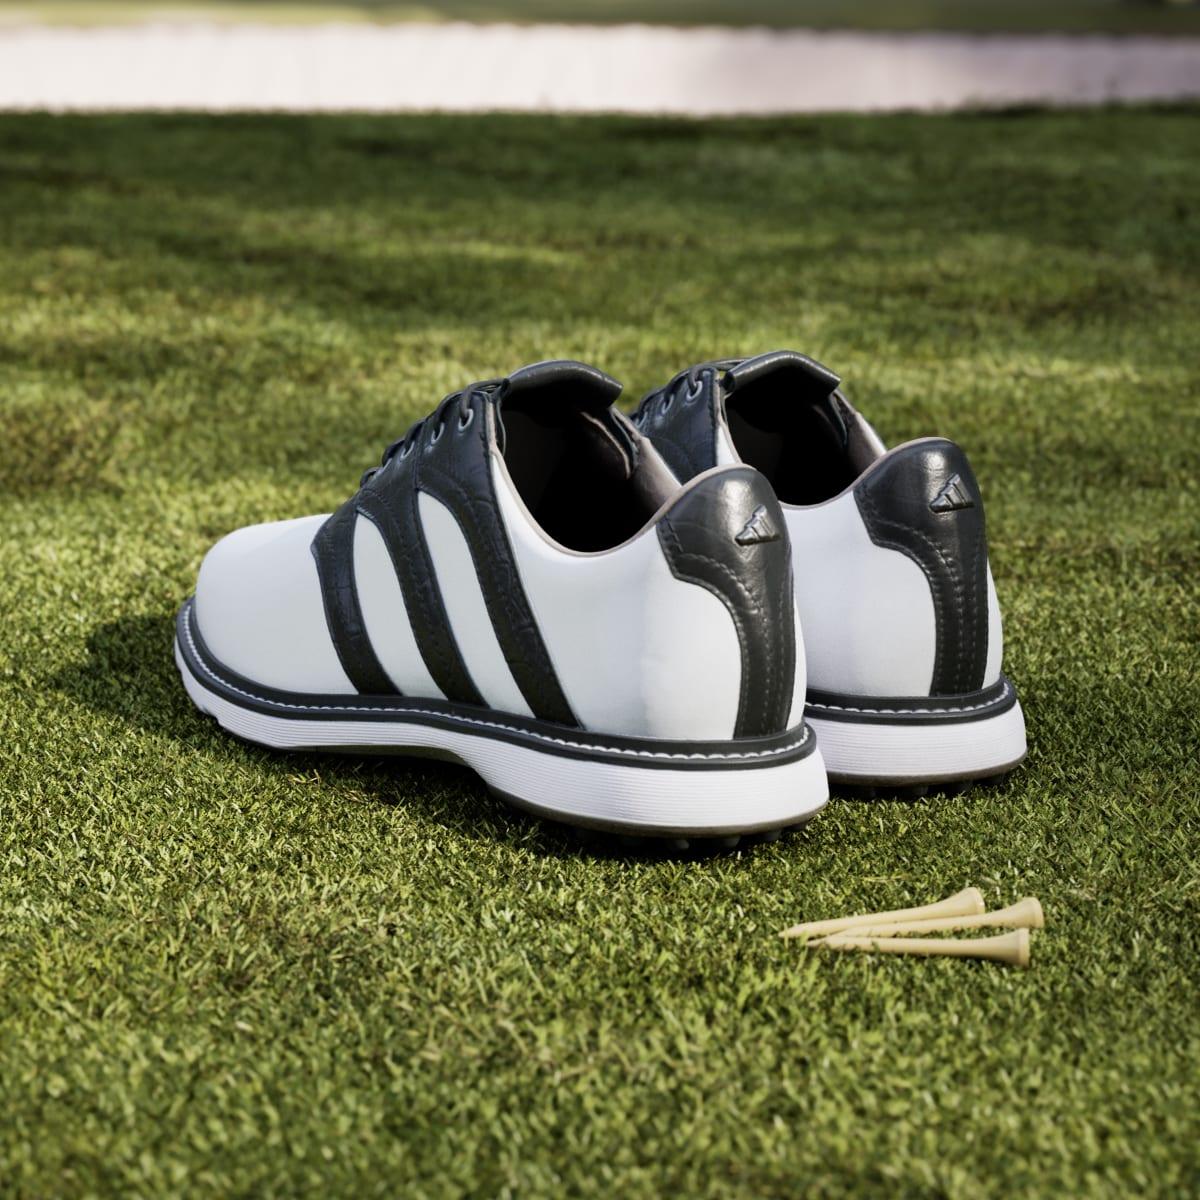 Adidas MC Z-Traxion Spikeless Golf Shoes. 5